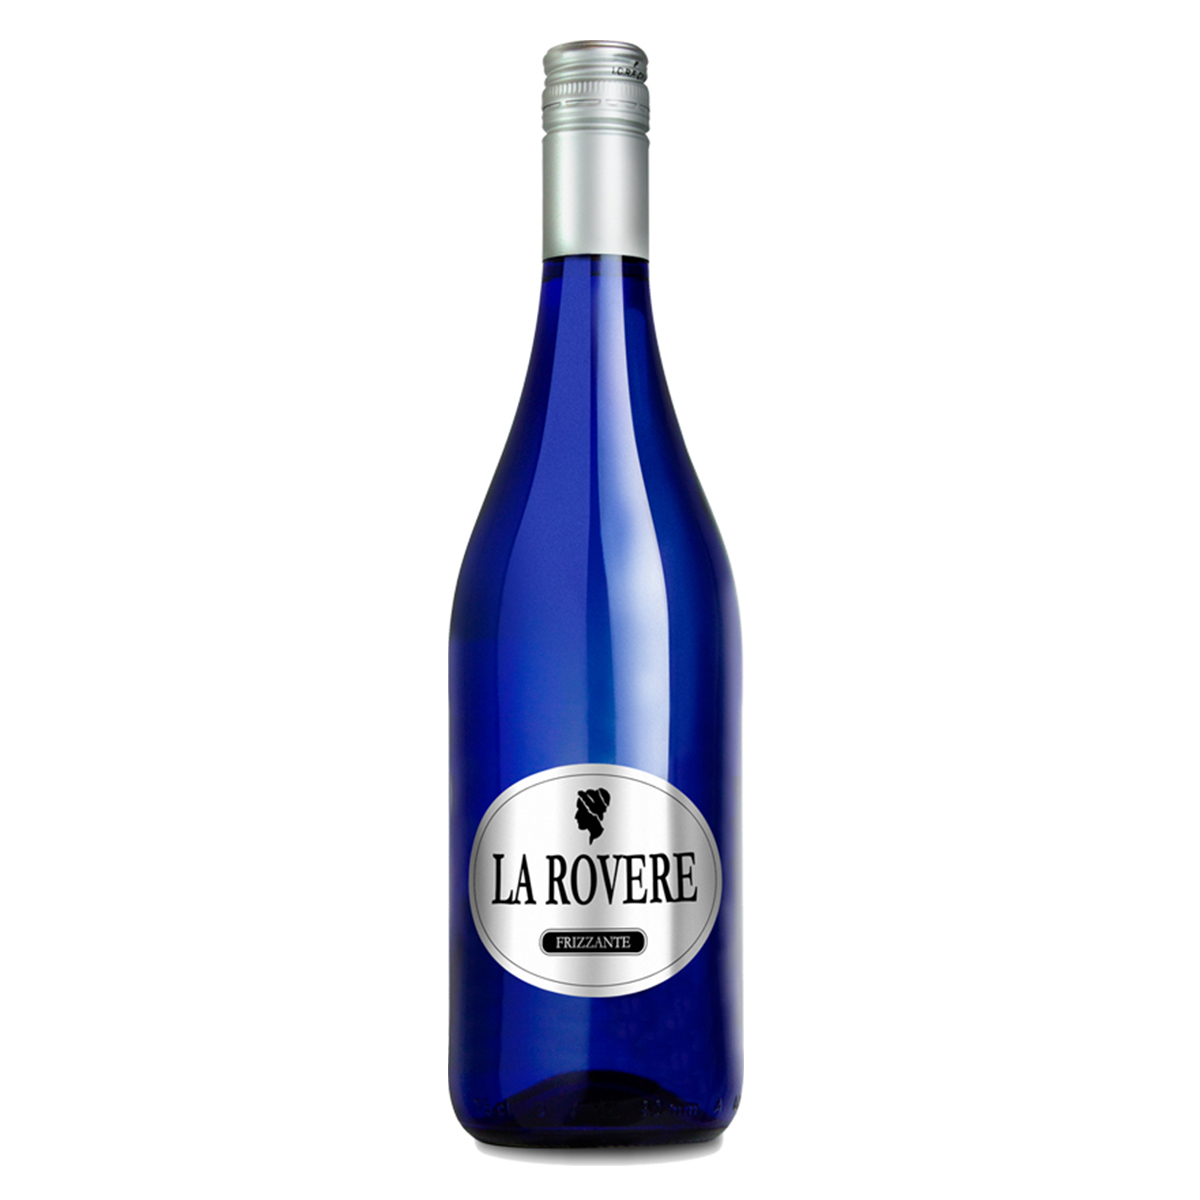 La vin. La Rovere вино. Hugo Frizzante. Просекко в голубой бутылке. Вино Фризанте.